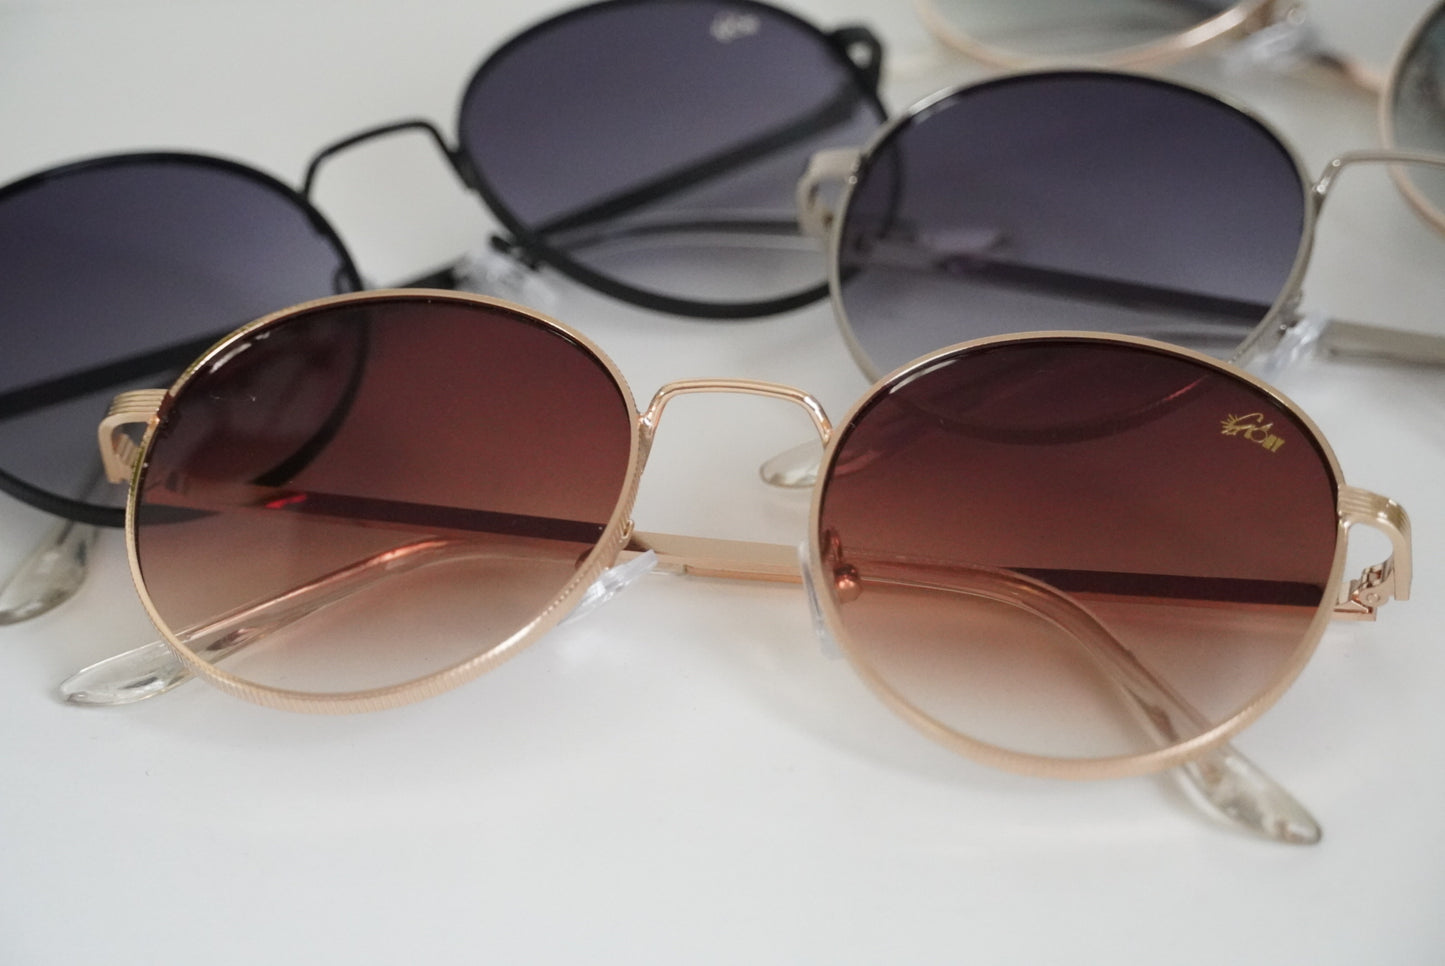 "Round Classy Sunglasses"